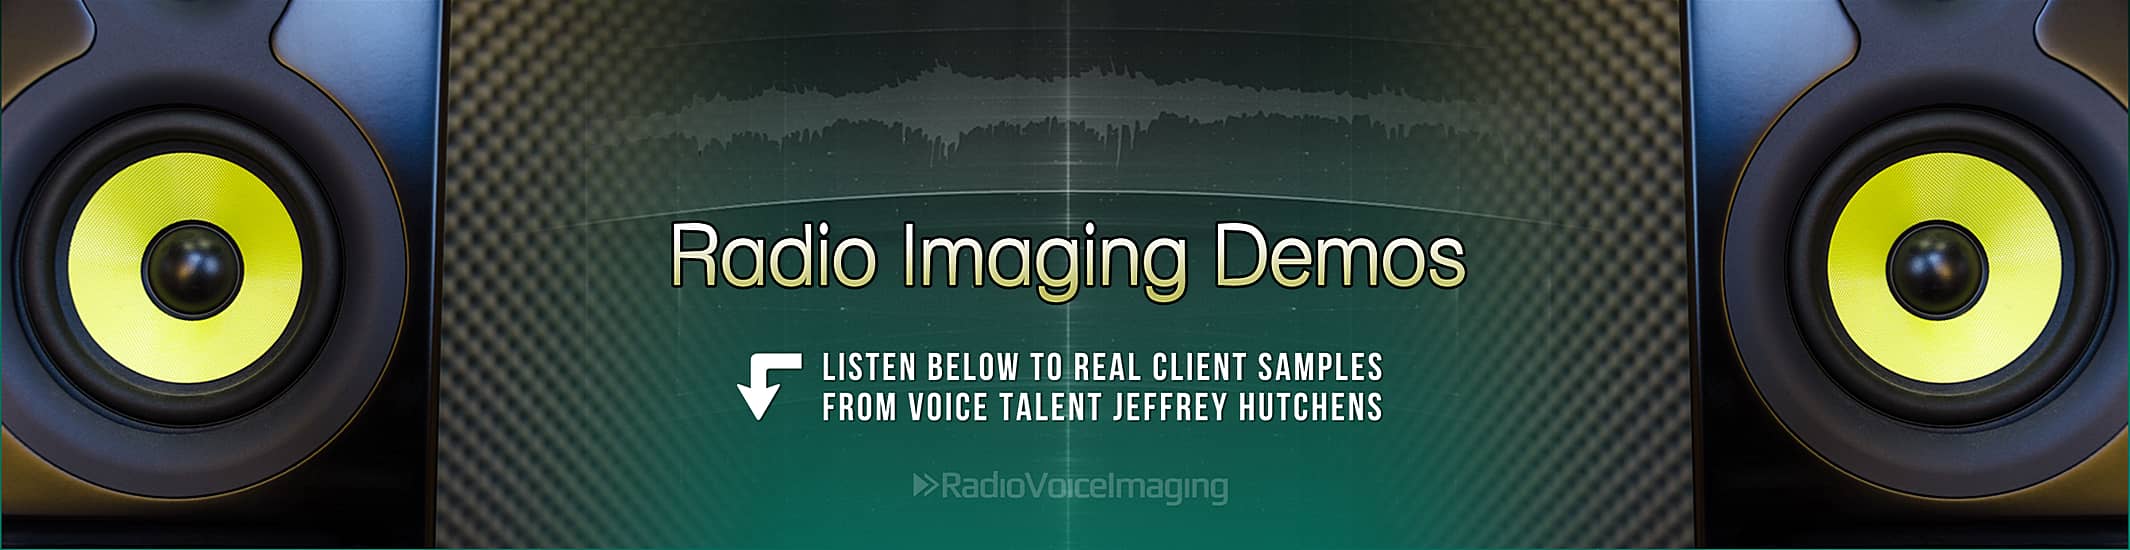 Radio Imaging Demos